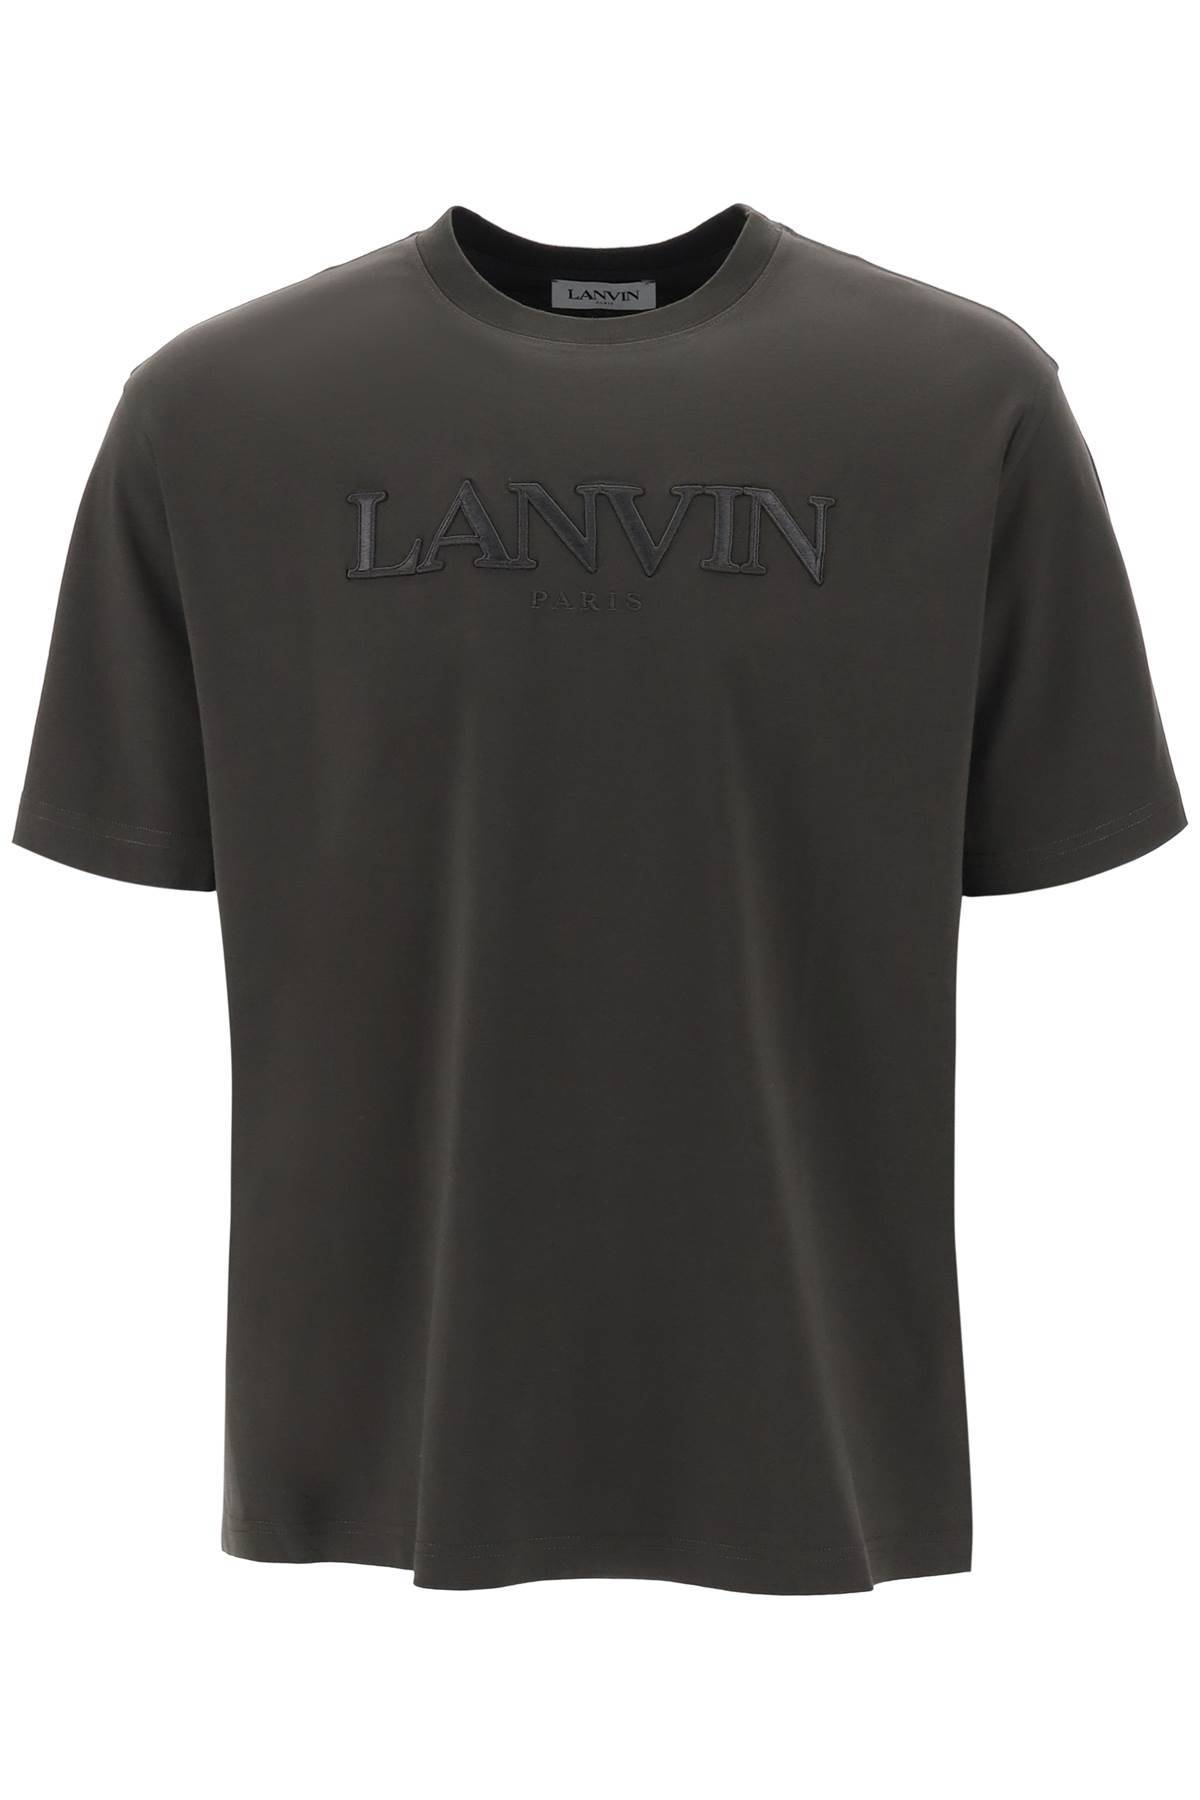 Lanvin LANVIN oversize t-shirt with logo lettering